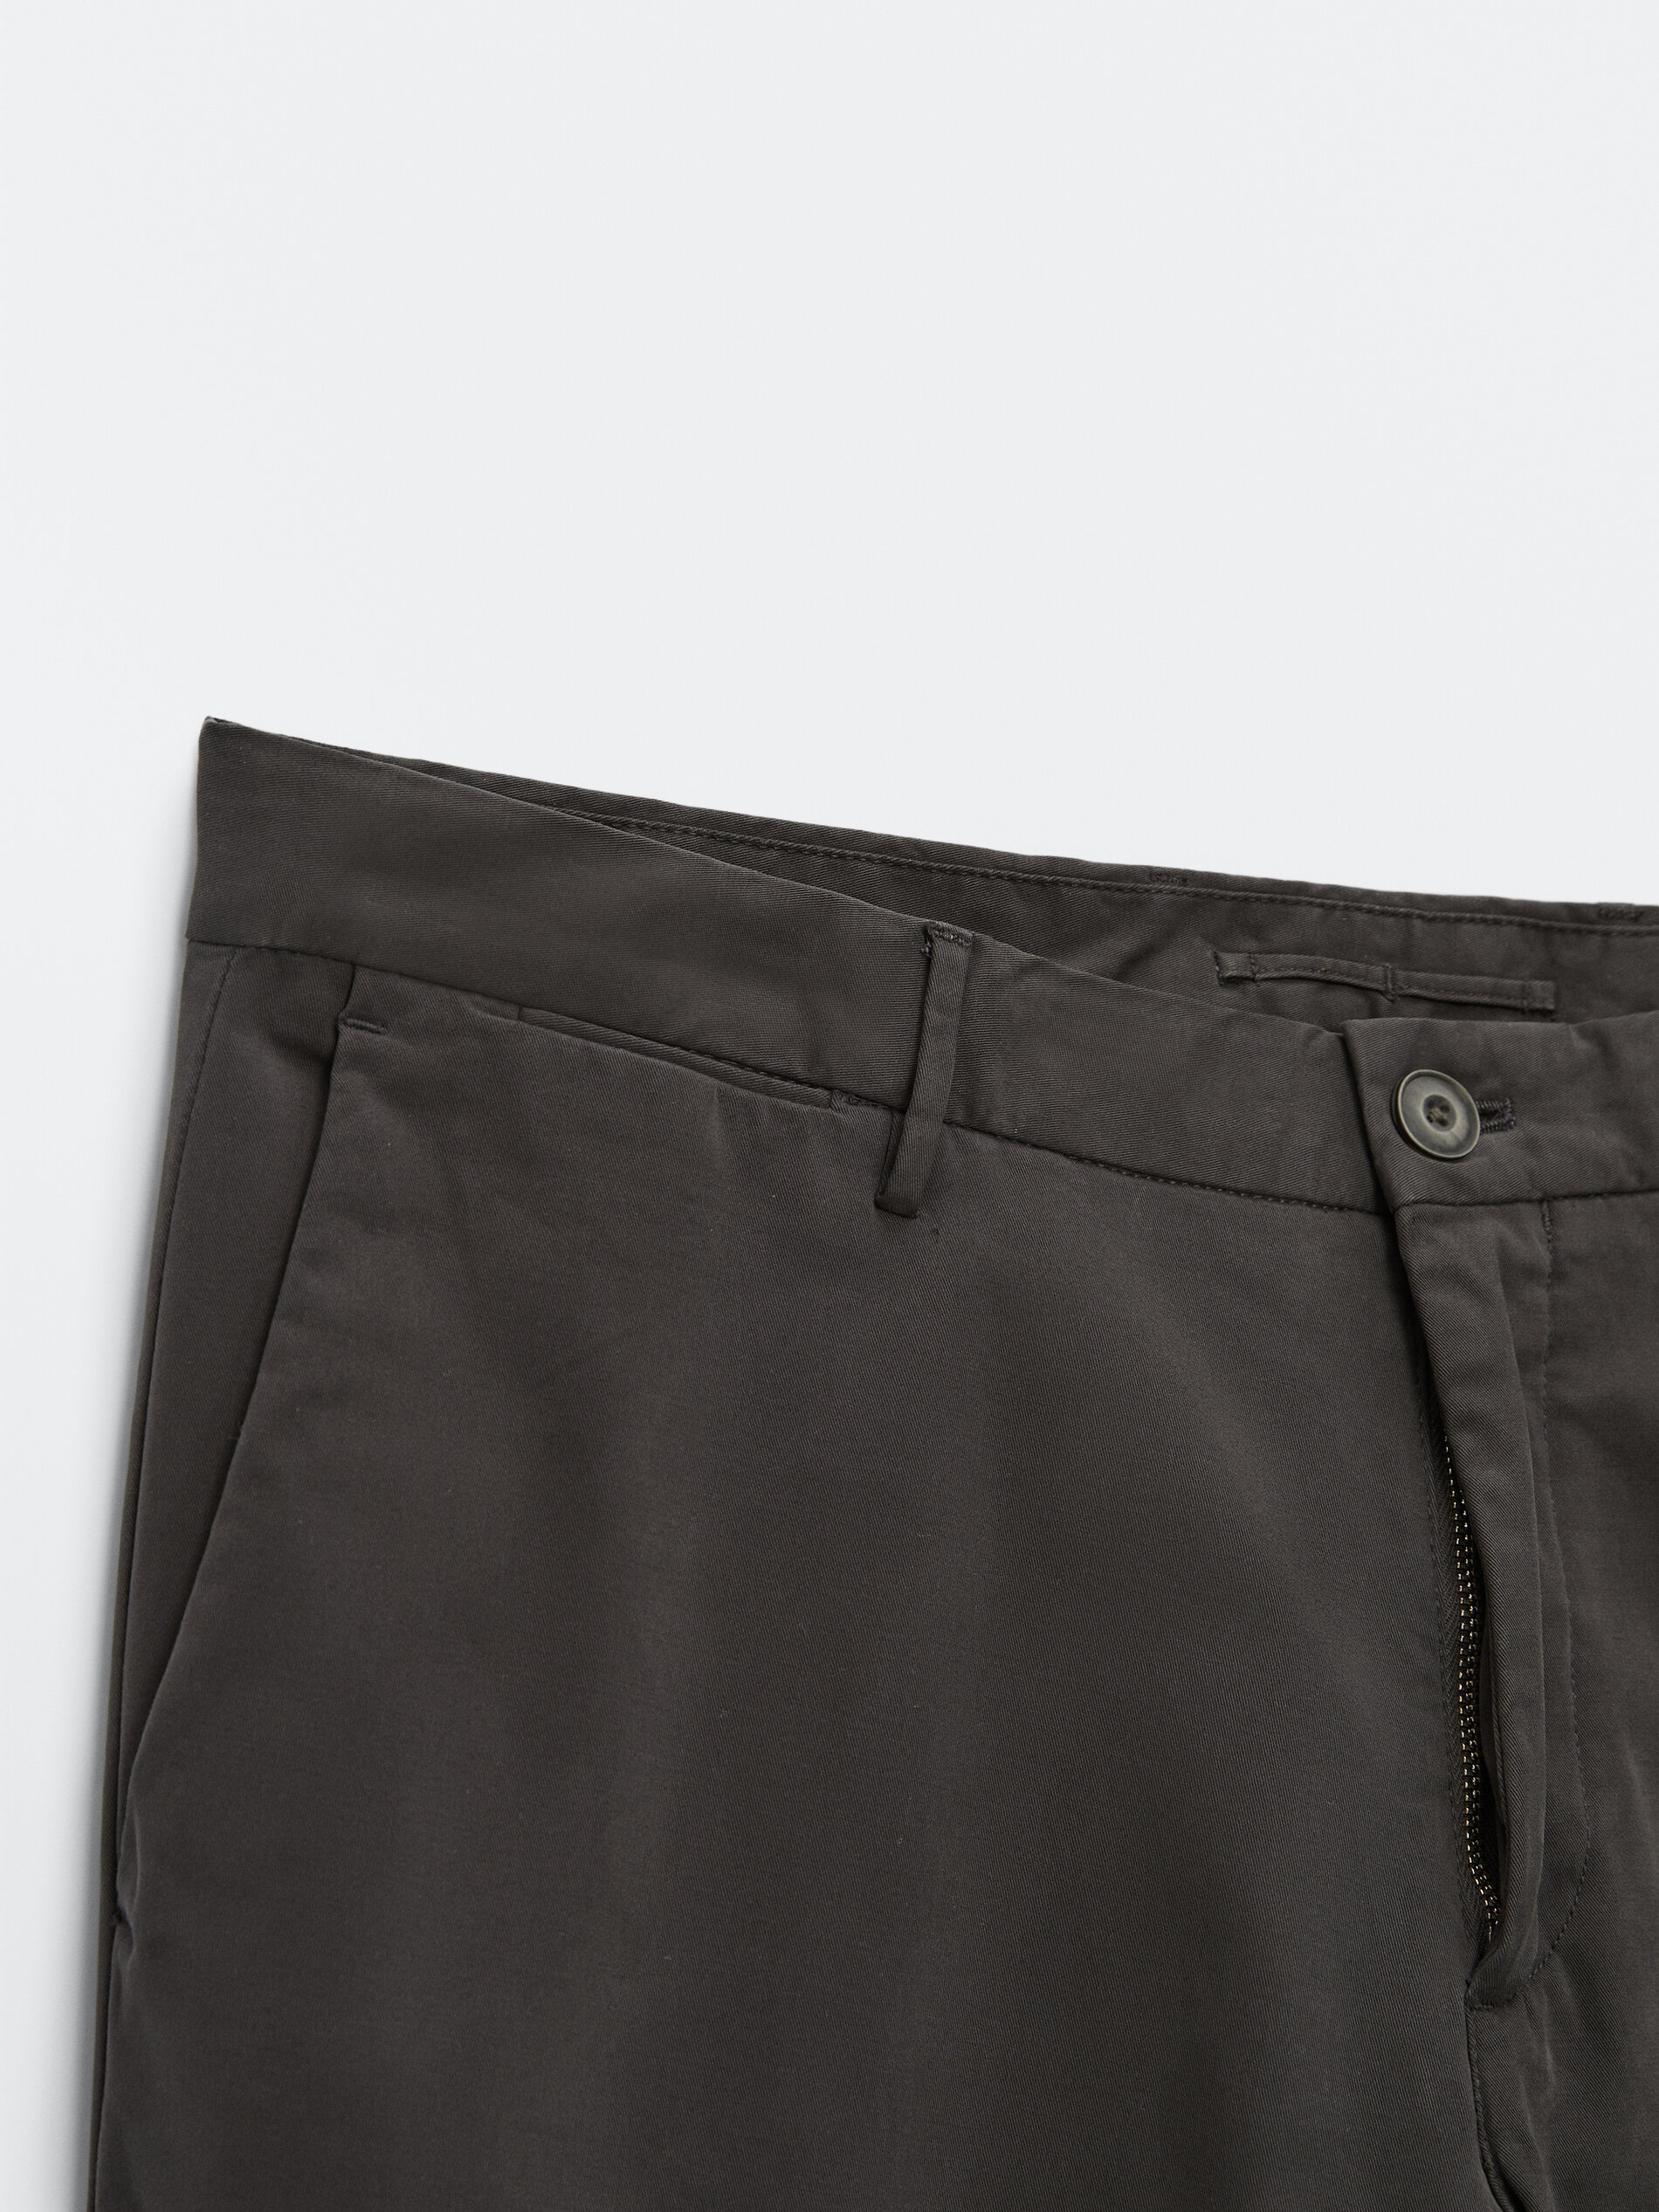 Men's Slim Fit Chinos & Khaki Pants | Nordstrom